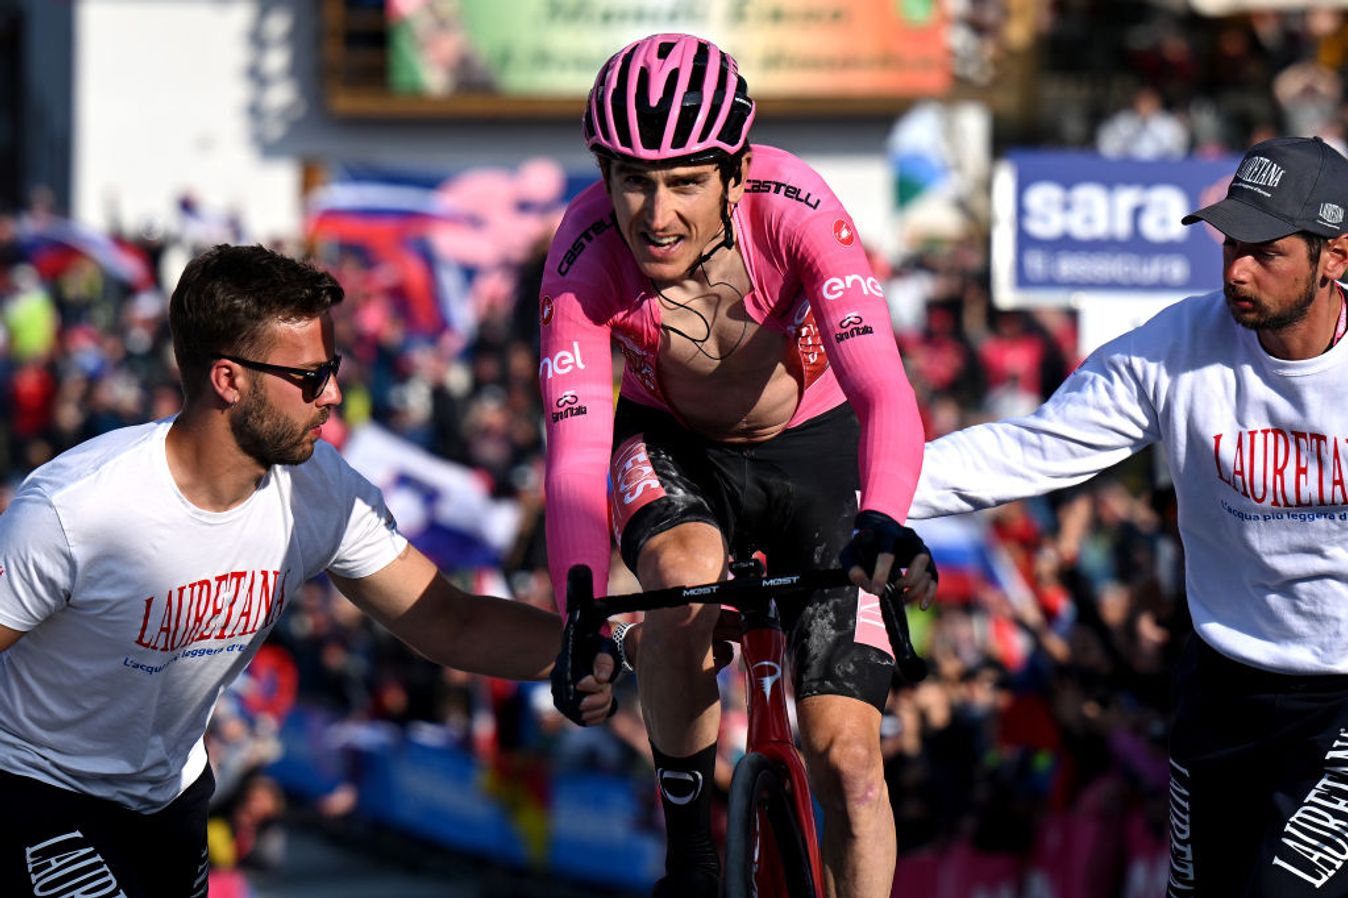 Geraint Thomas' 2023 Giro bid fell apart during the penultimate stage time trial